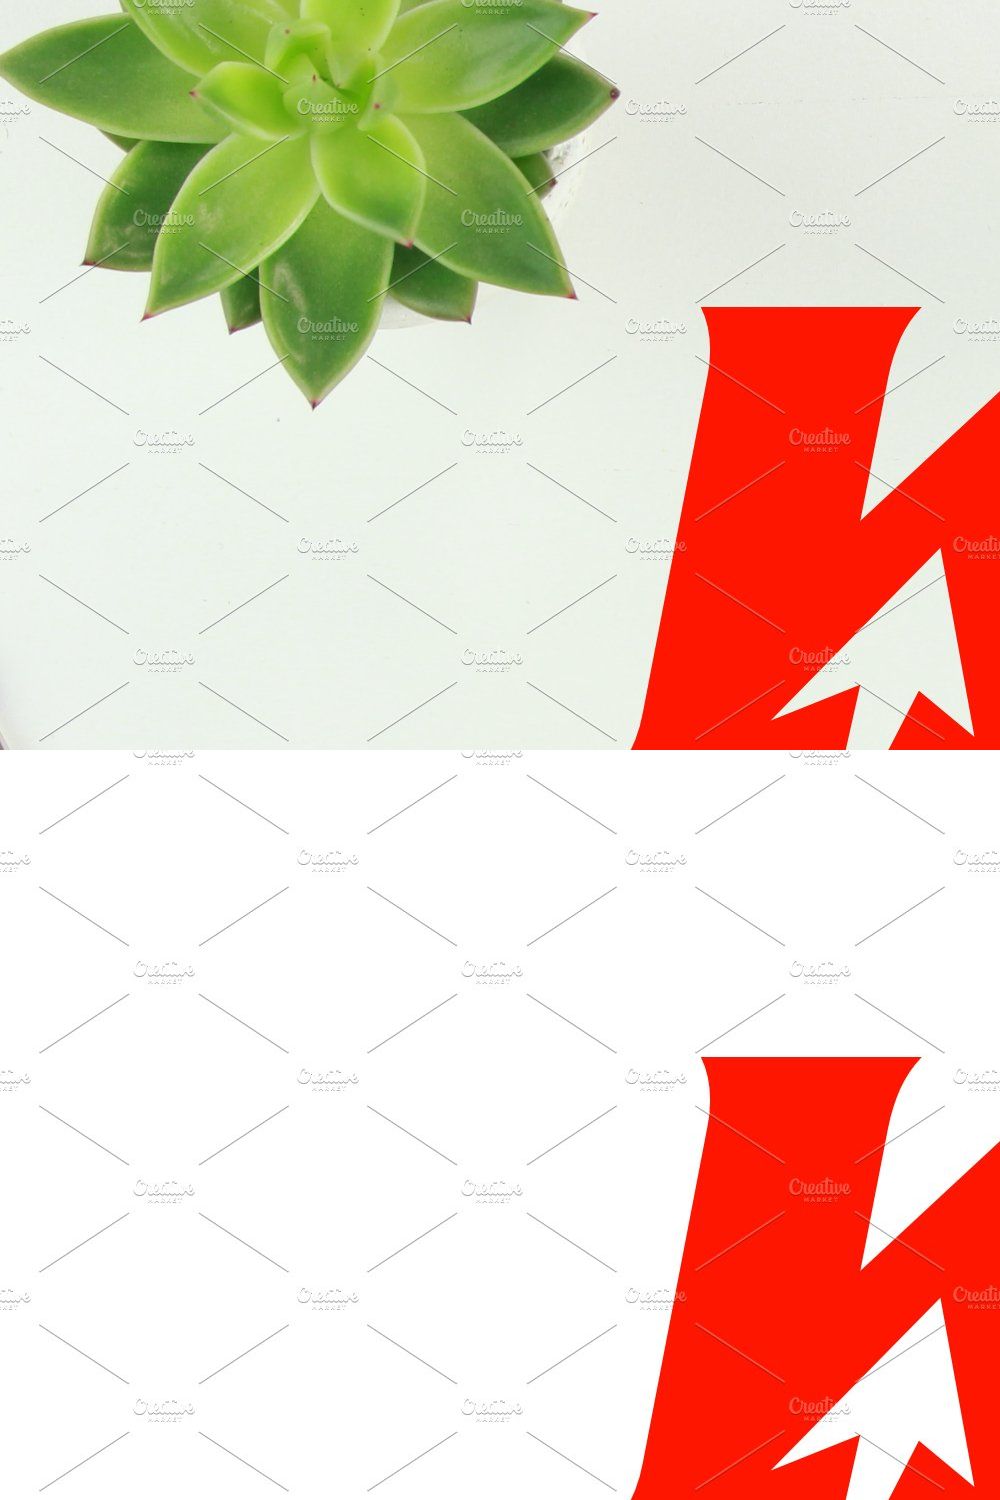 k letter arrow logo pinterest preview image.